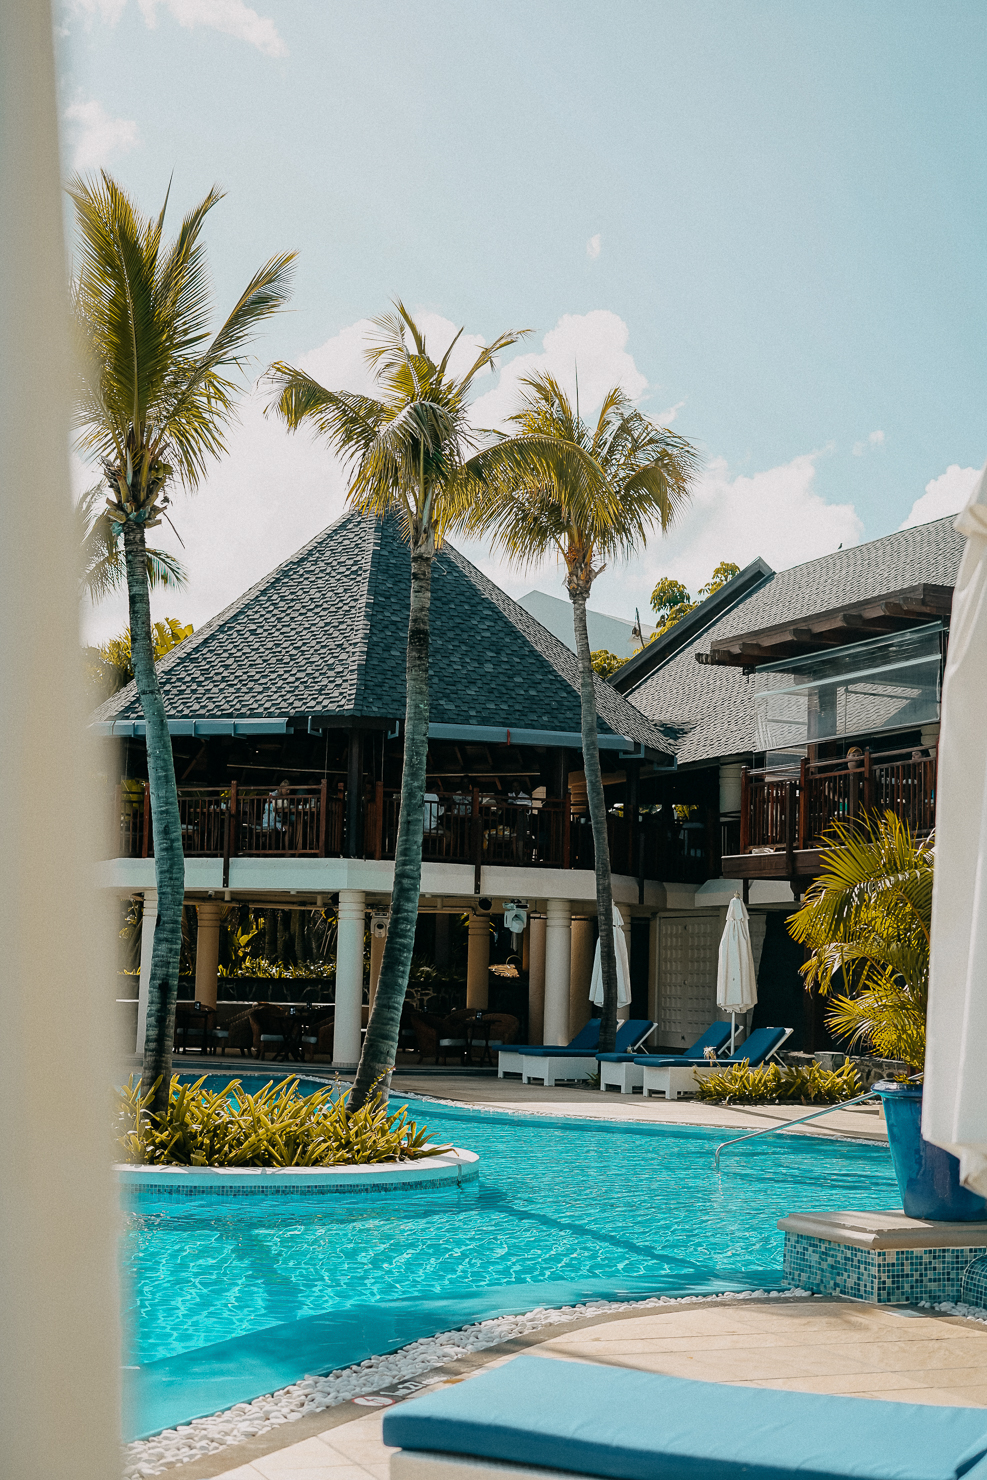 Flitterwochen Ziel Flitterwochen Hotel Mauritius Maritim Hotel Resort Spa Pool Reiseblog 5